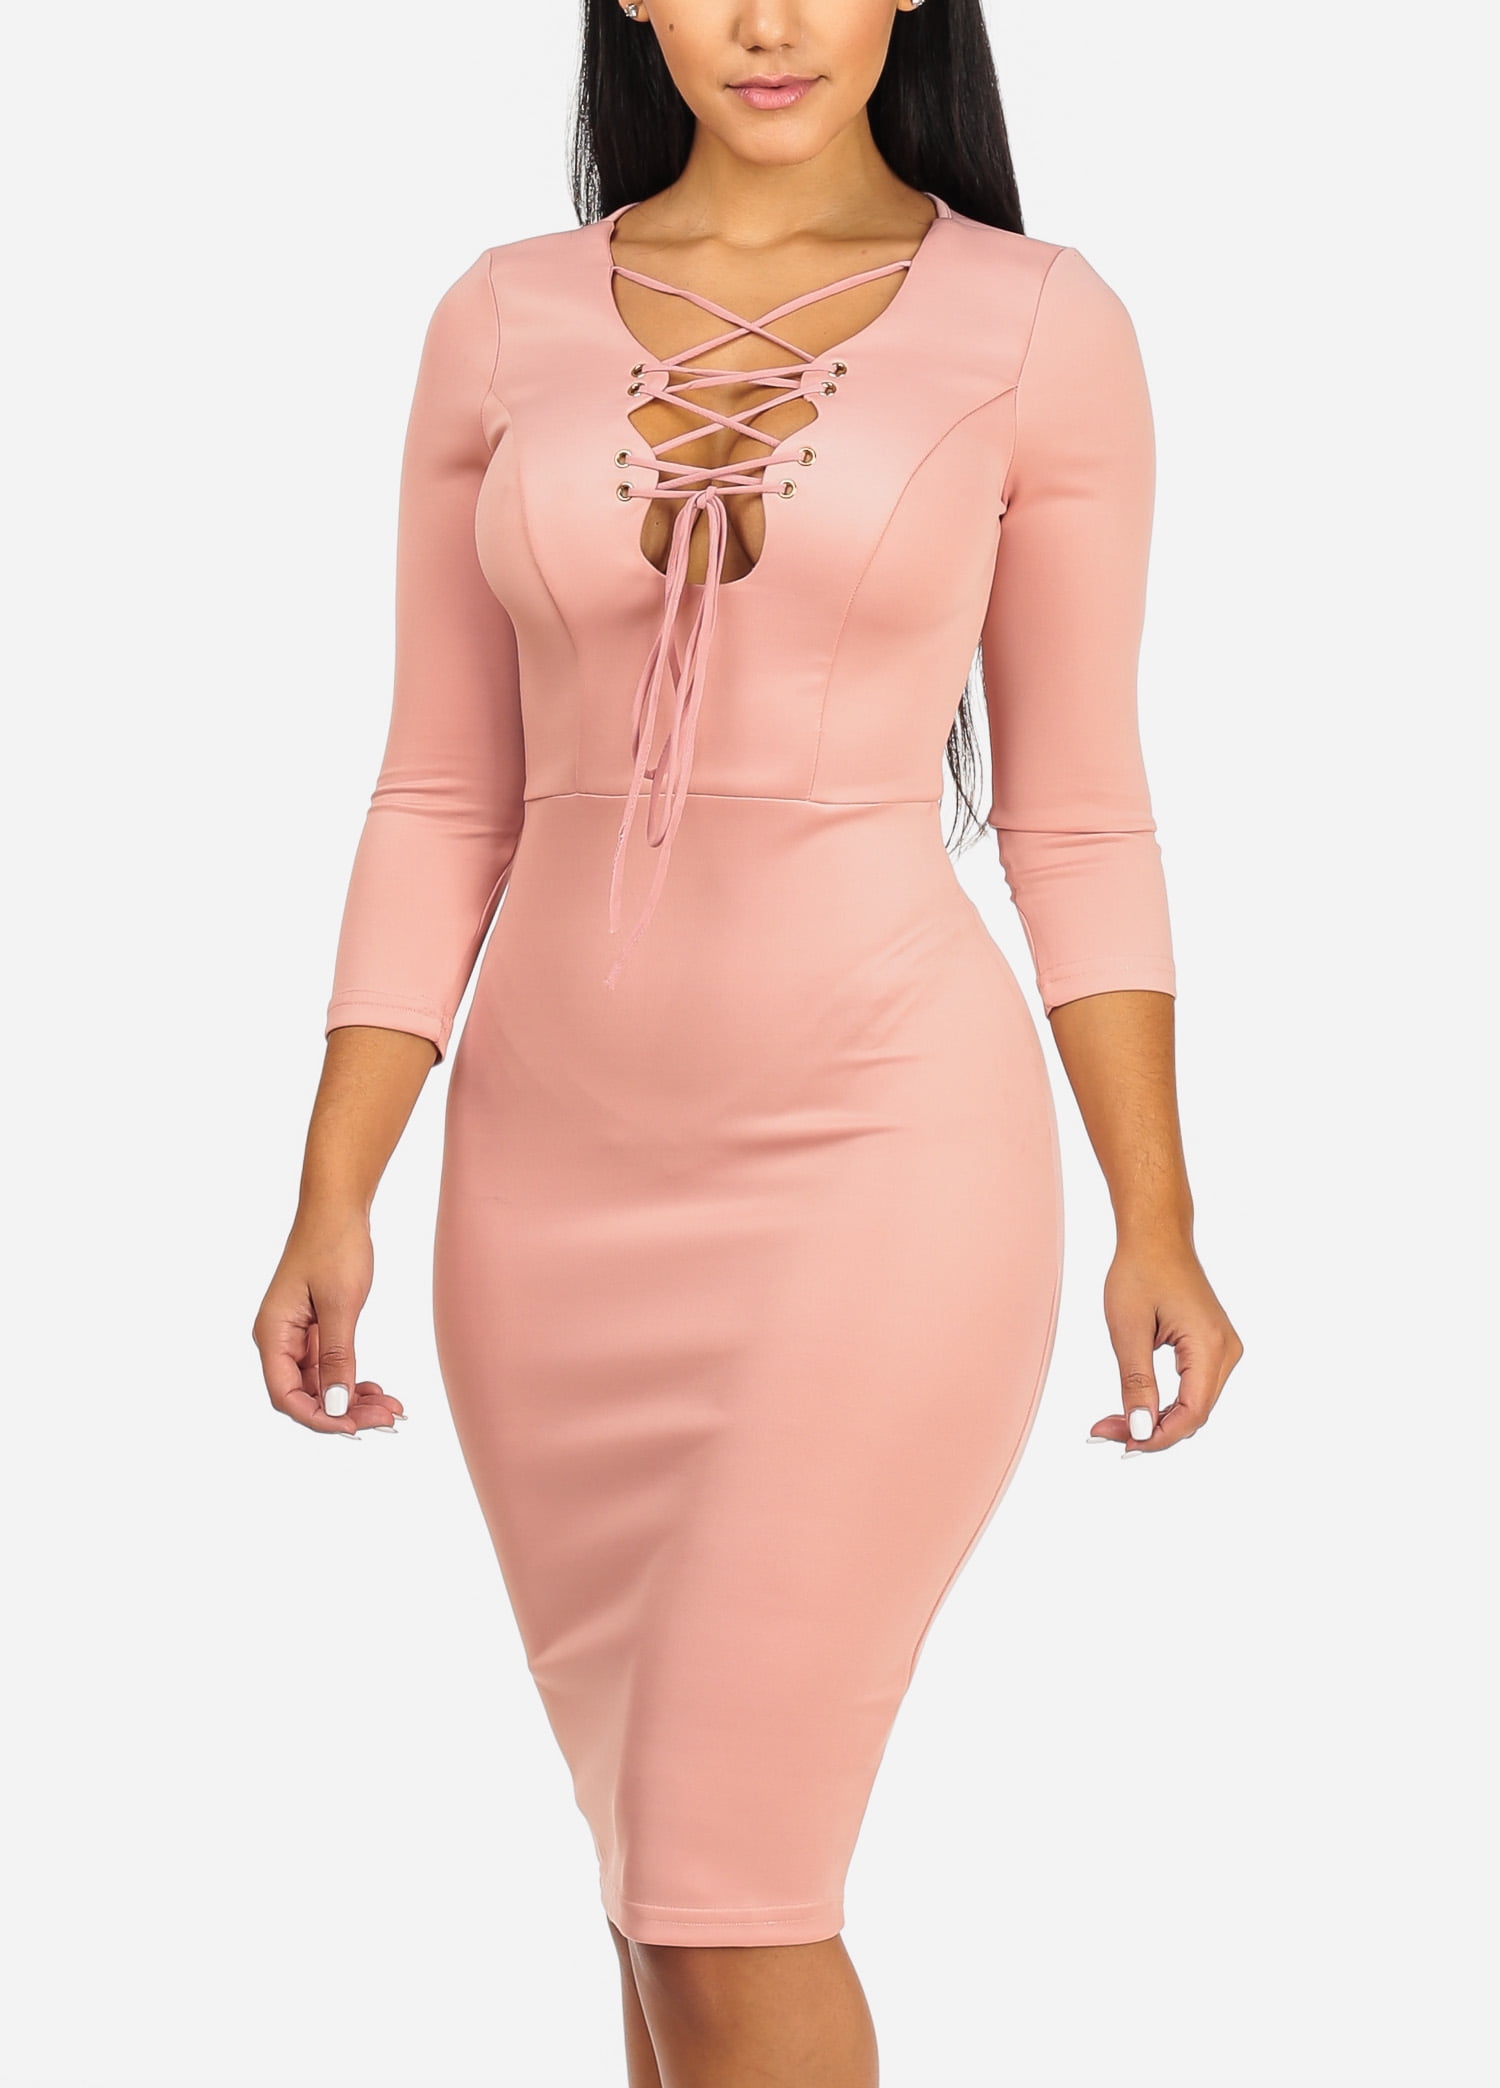 blush colored women's dresses